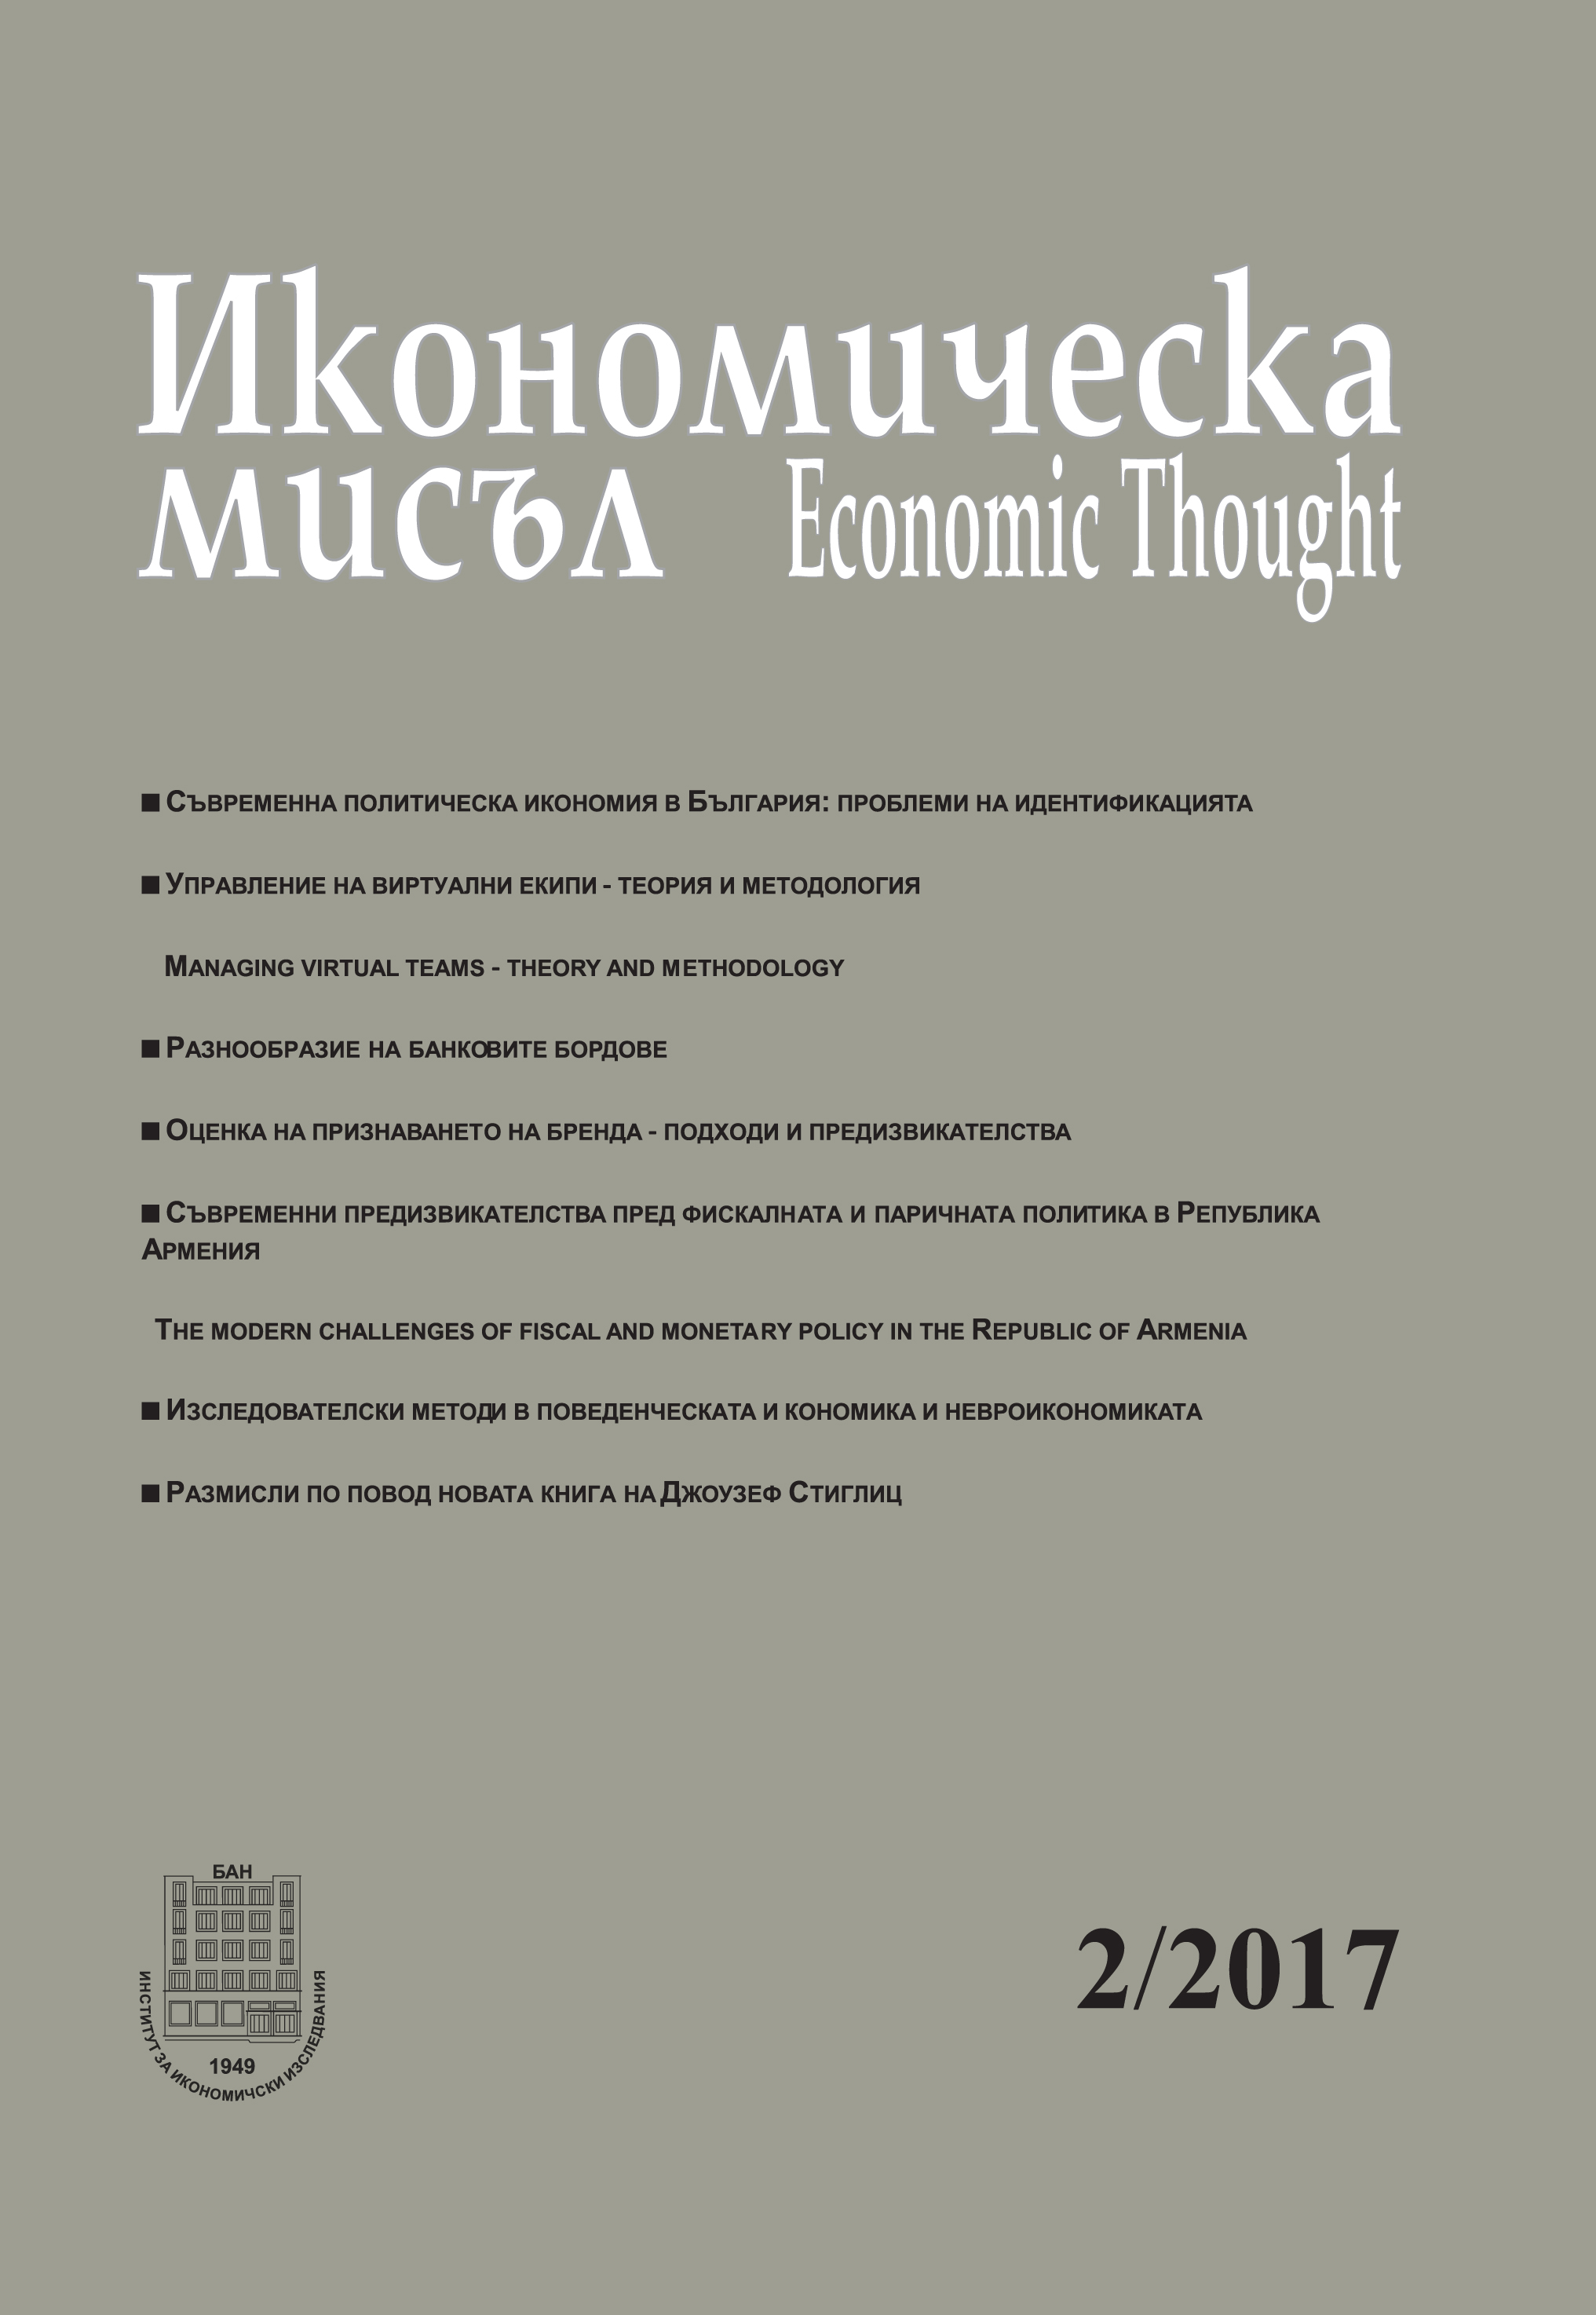 Research methods in behavioral economics and neuroeconomics Cover Image